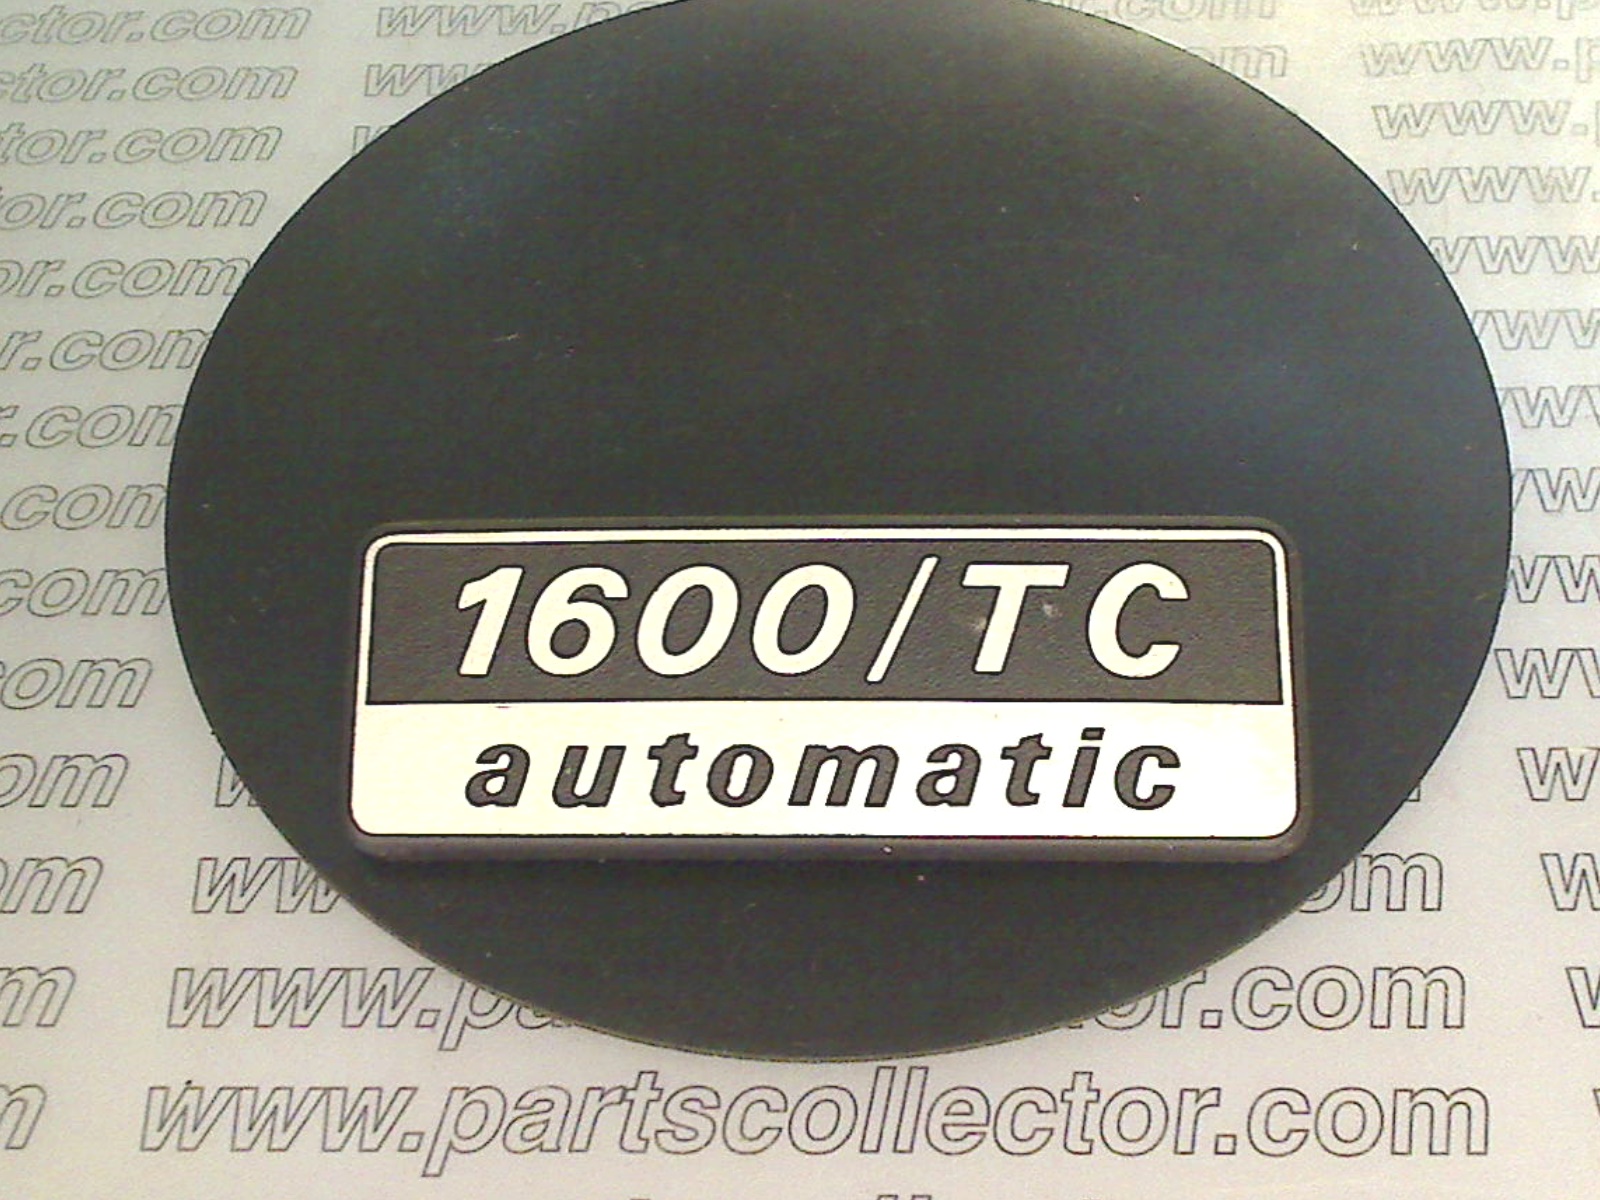 STEMMA 1600 / TC AUTOMATIC